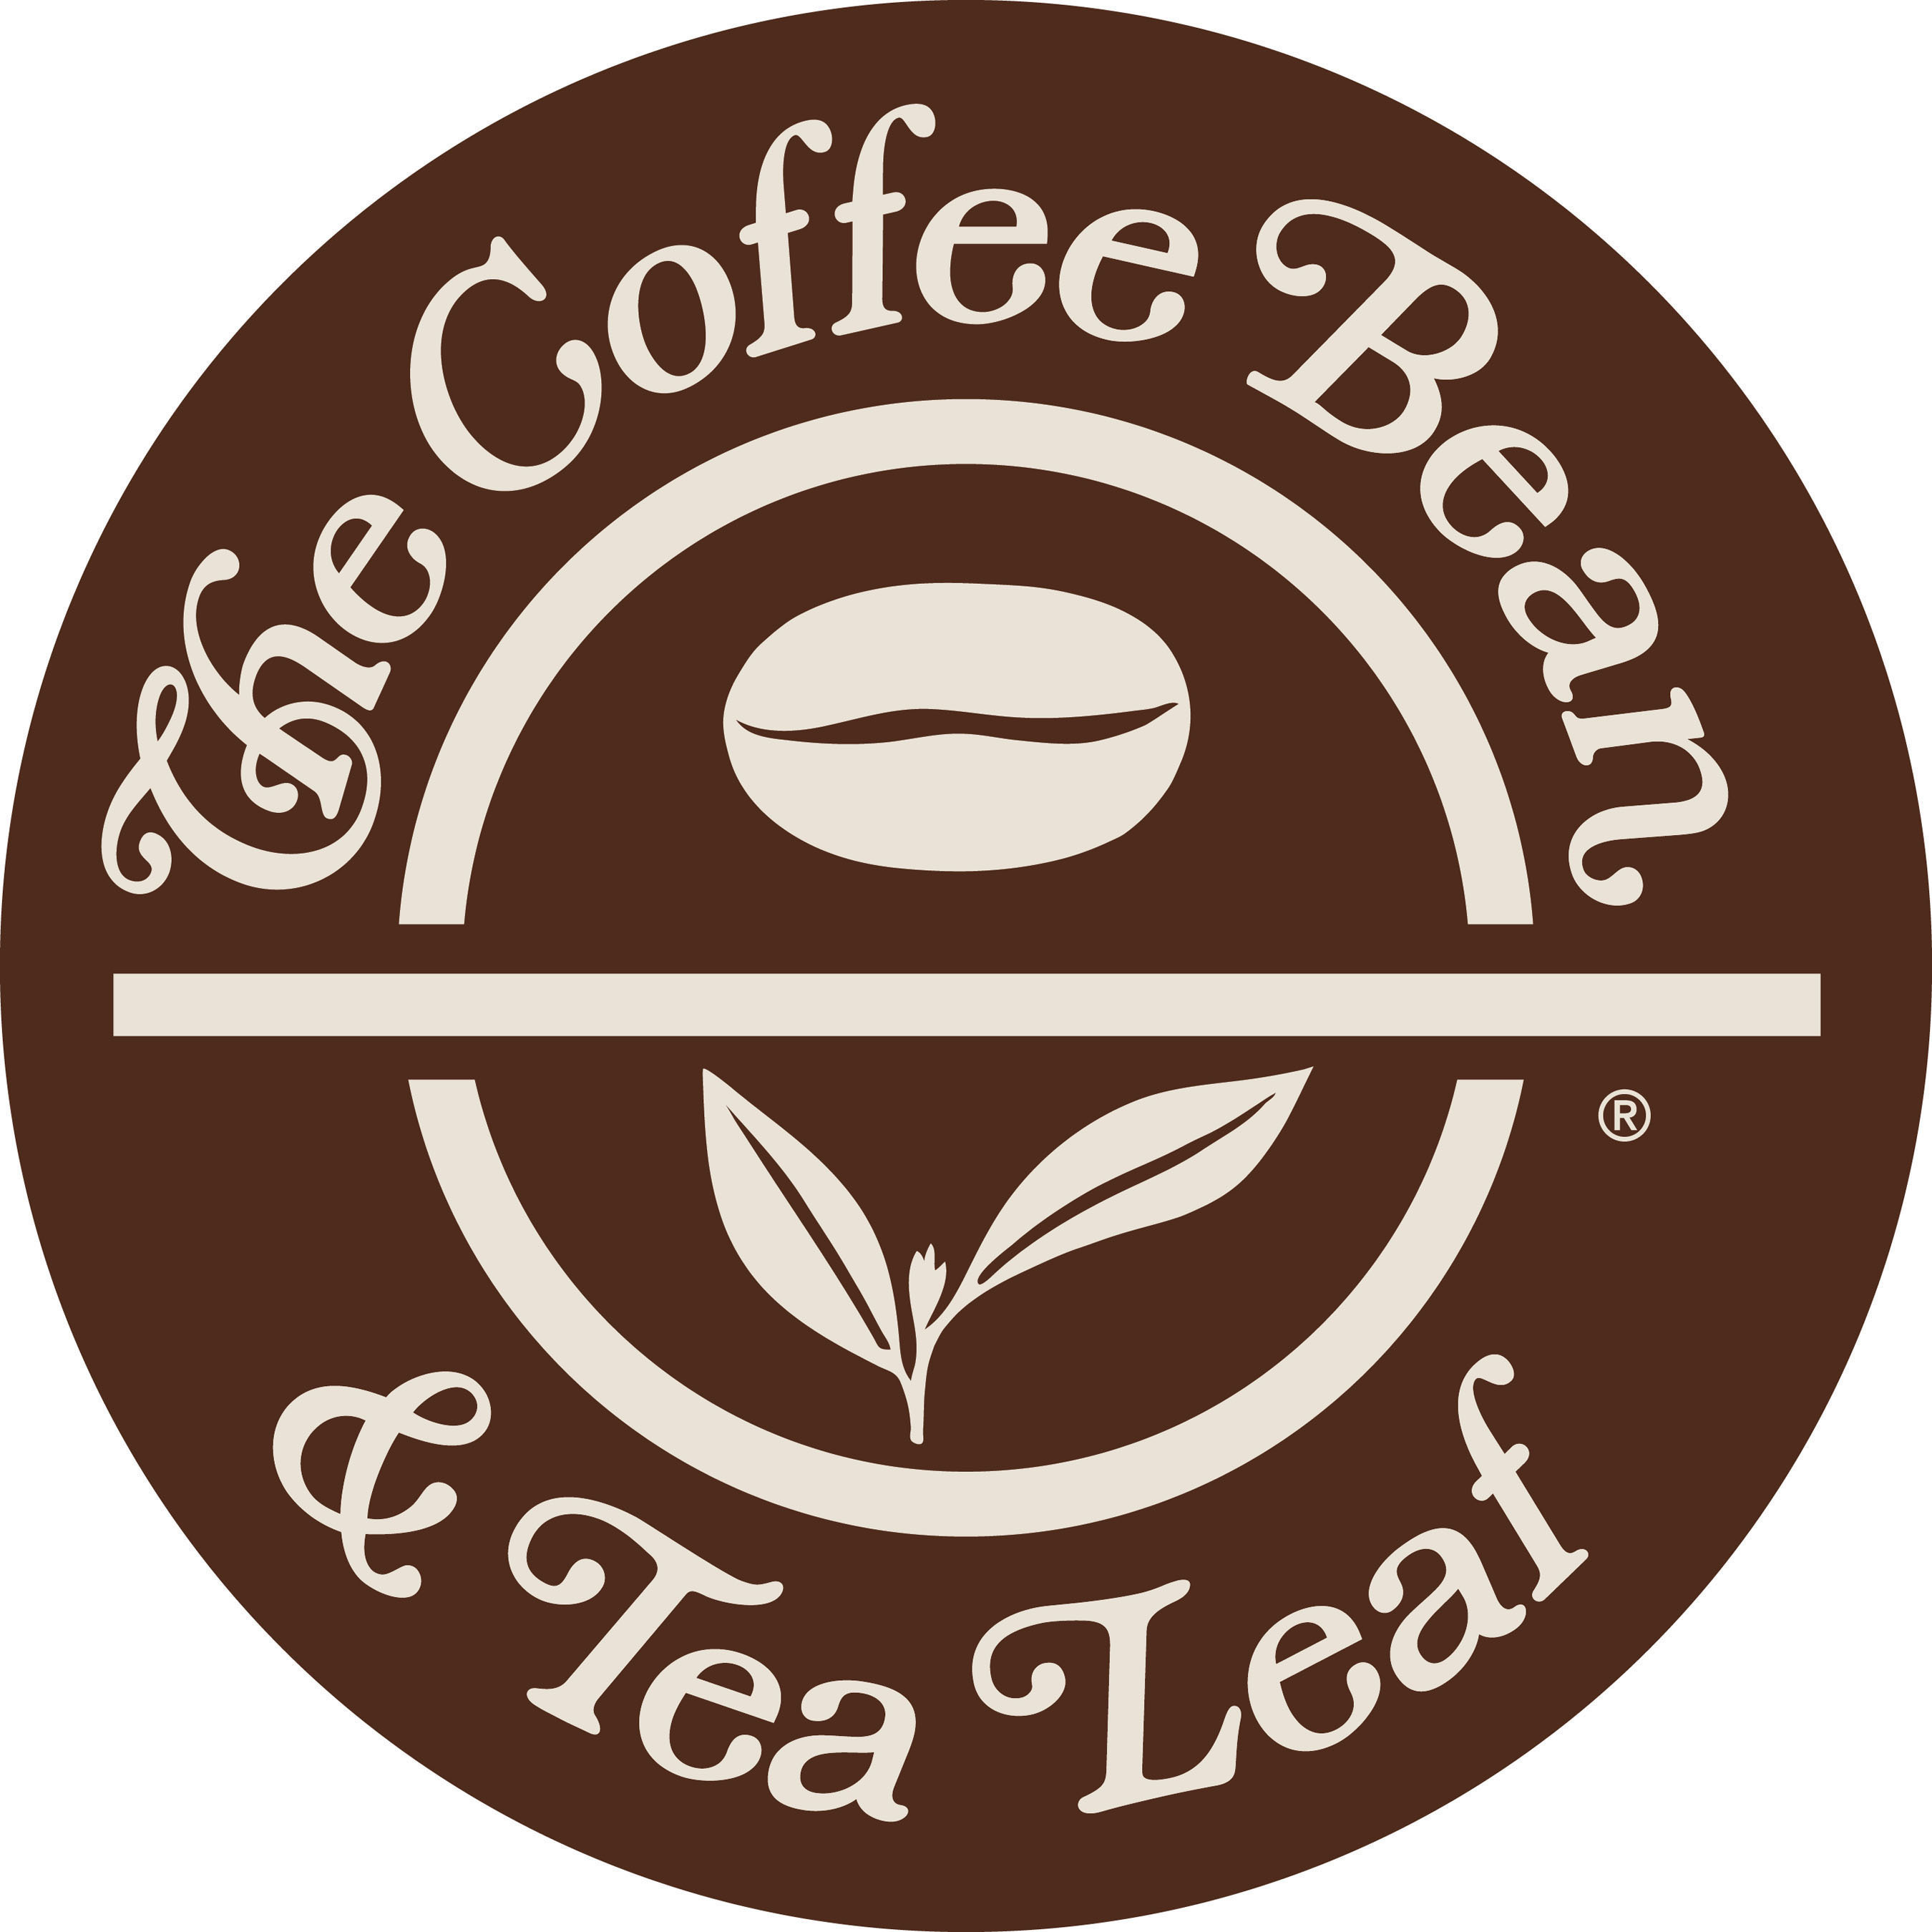 The Coffee Bean & Tea Leaf® Announces New President And CEO, John Fuller